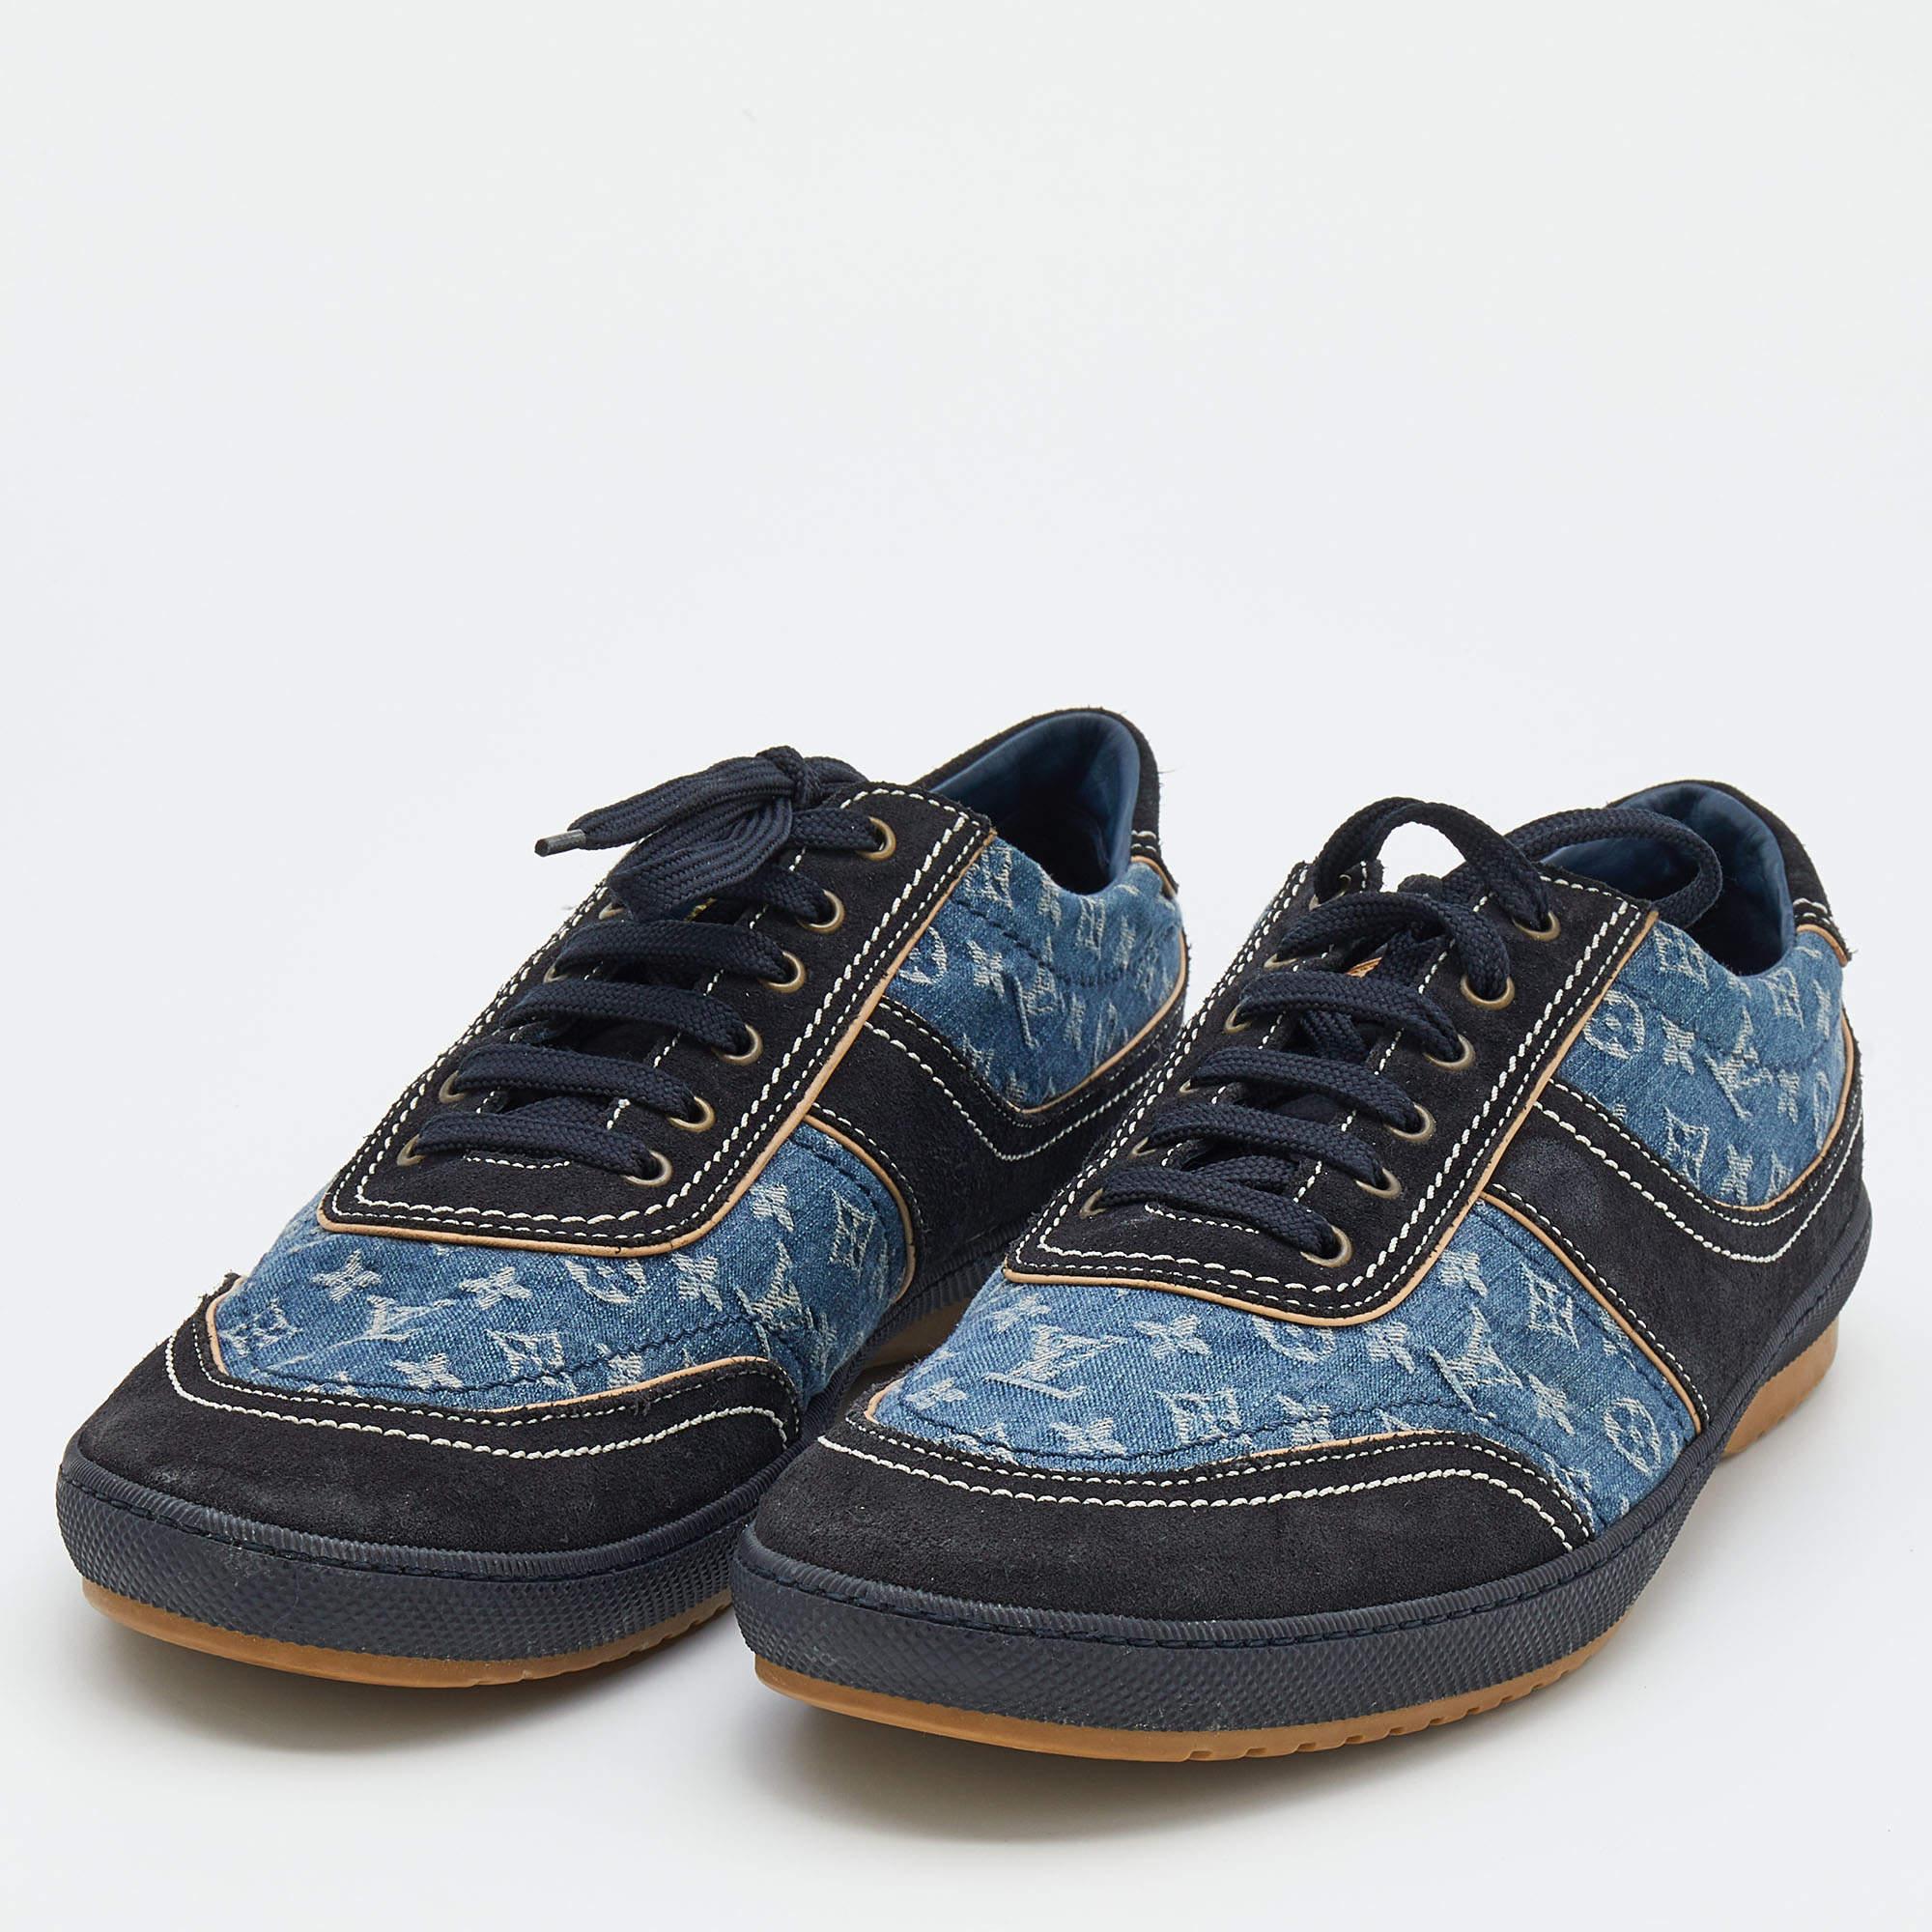 Men's Louis Vuitton Blue/Black Monogram Denim And Suede Low Top Sneakers Size 44.5